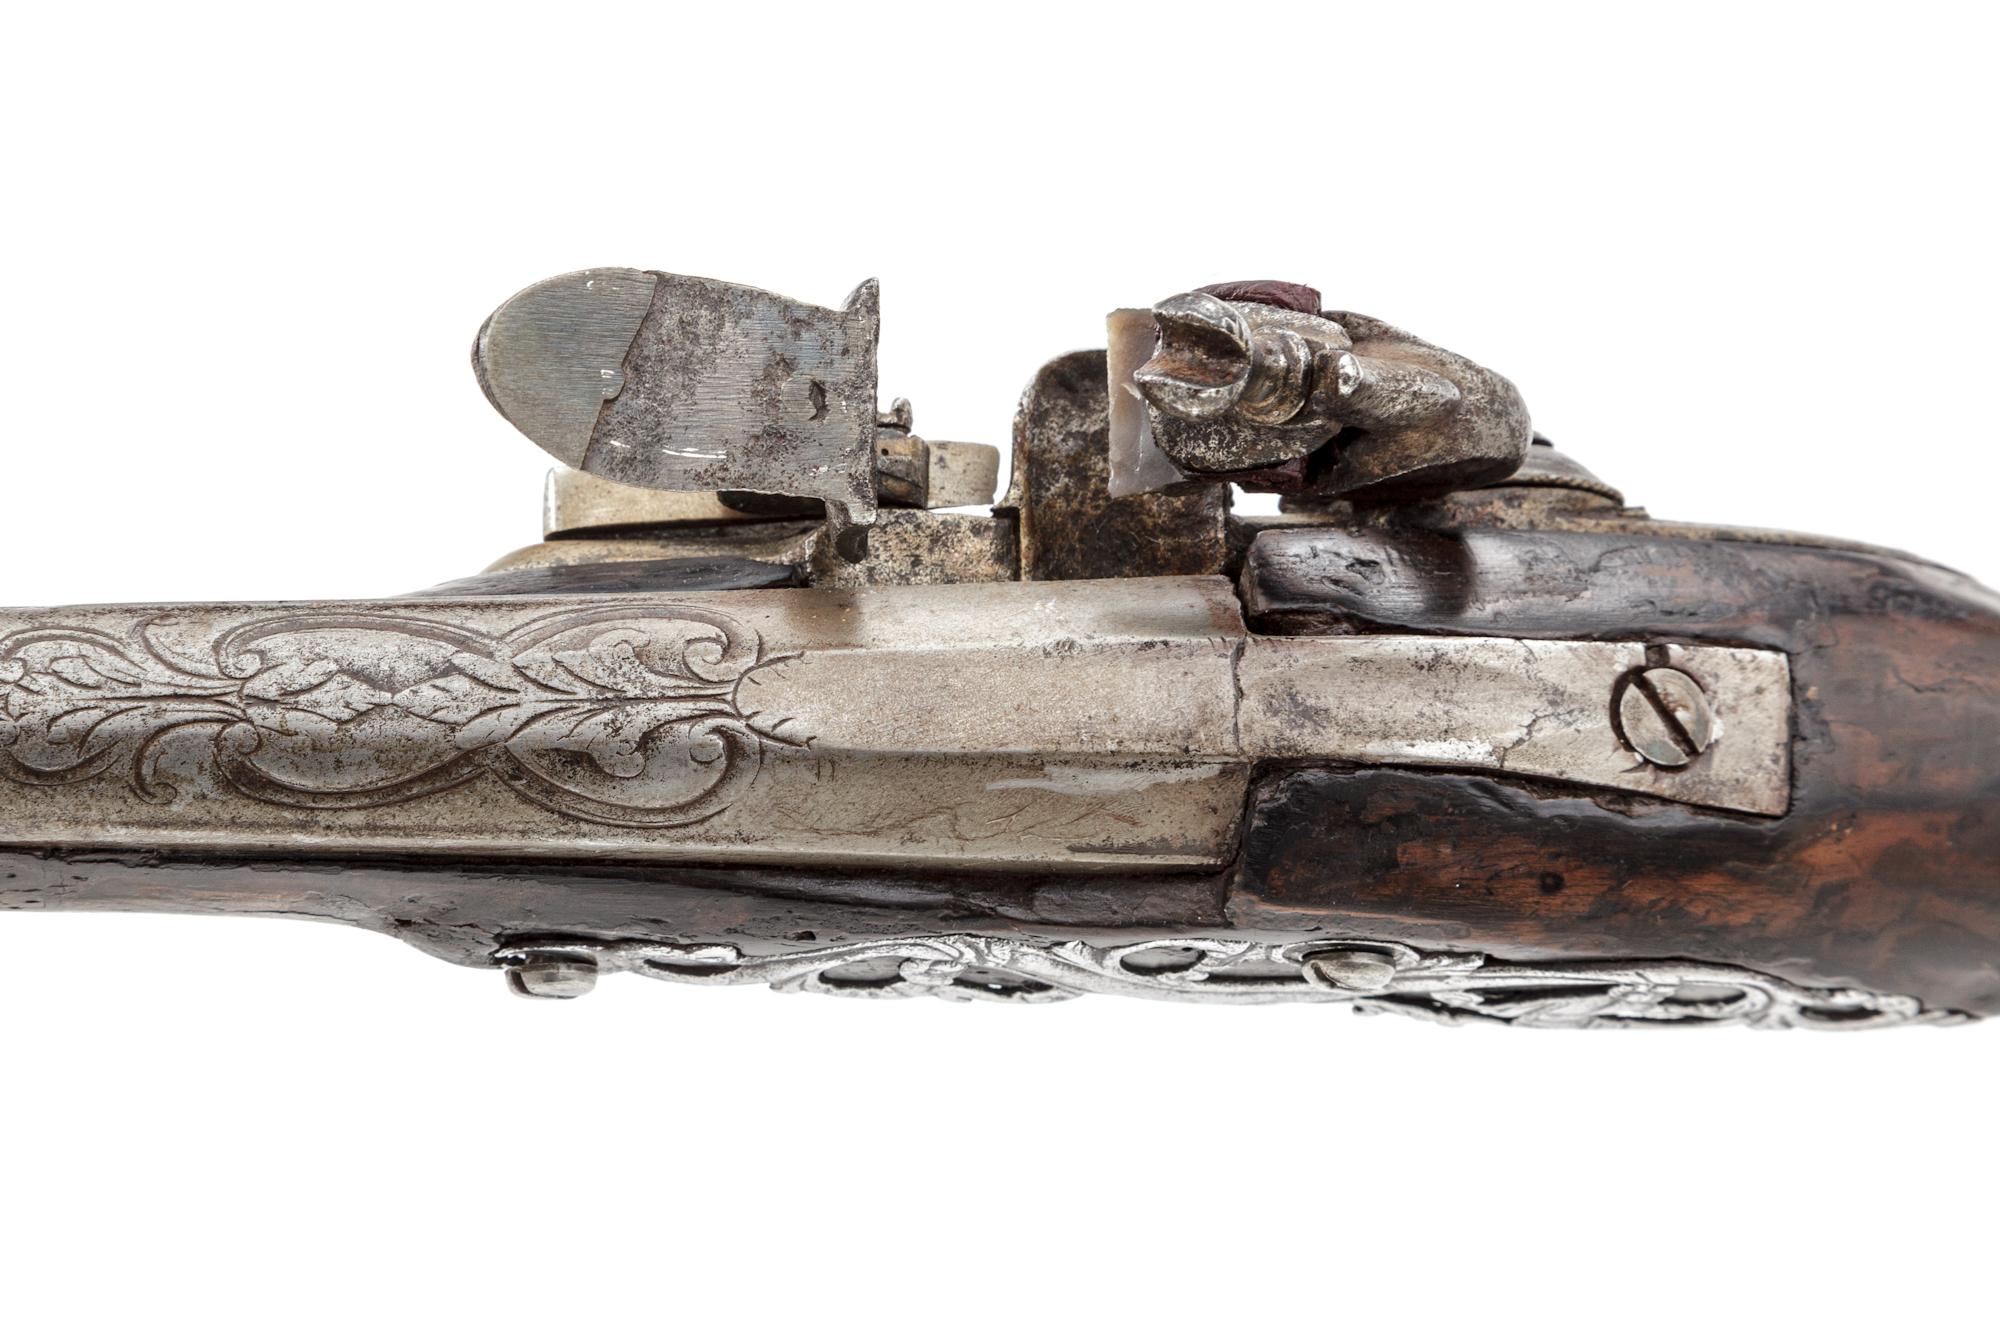 Ornate Antique European Flintlock Holster Pistol